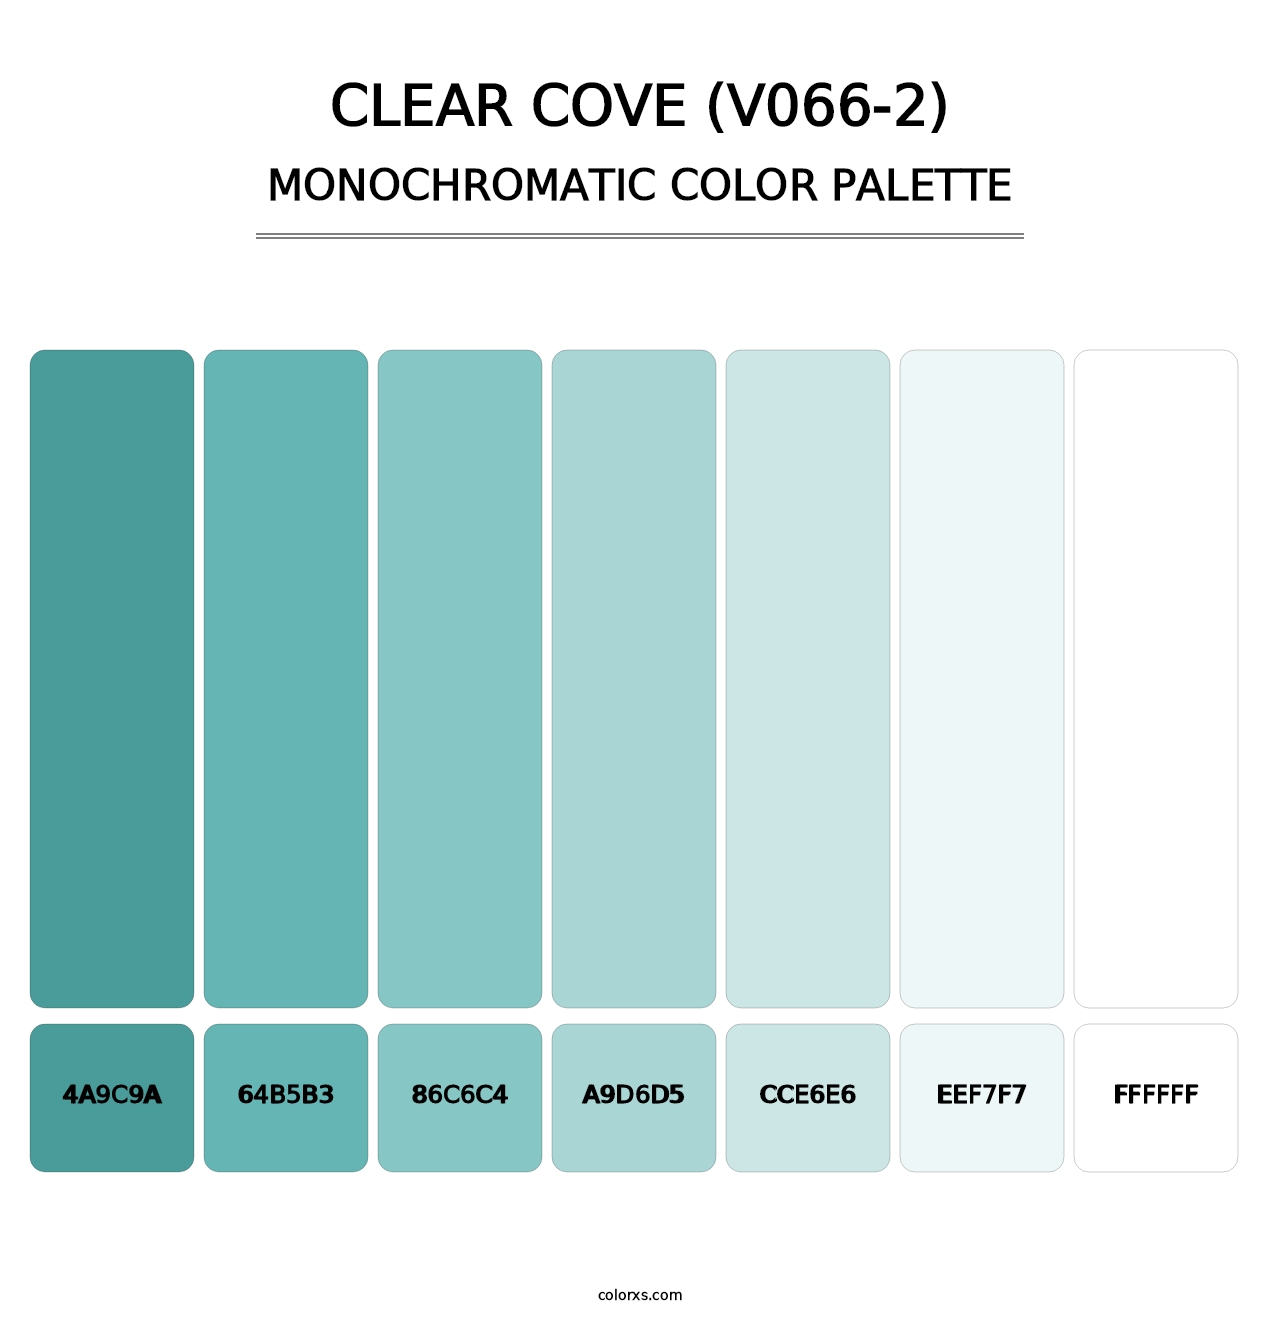 Clear Cove (V066-2) - Monochromatic Color Palette